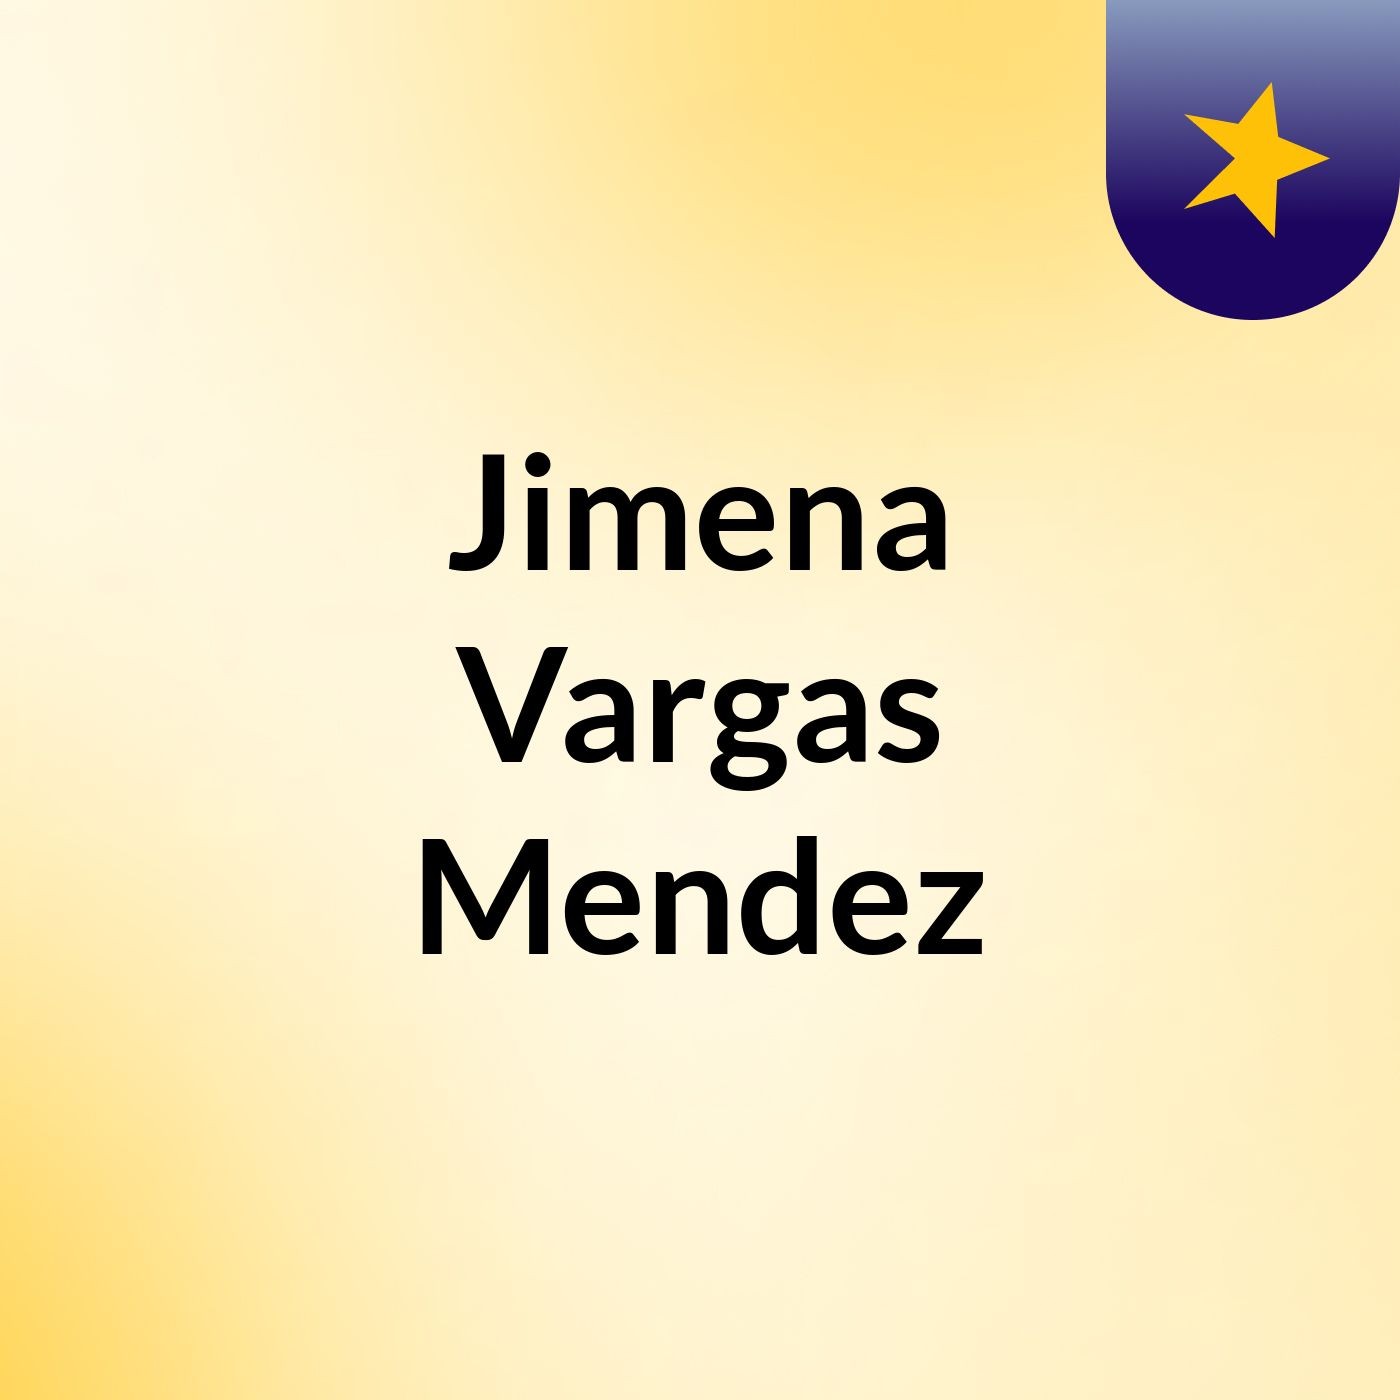 Jimena Vargas Mendez